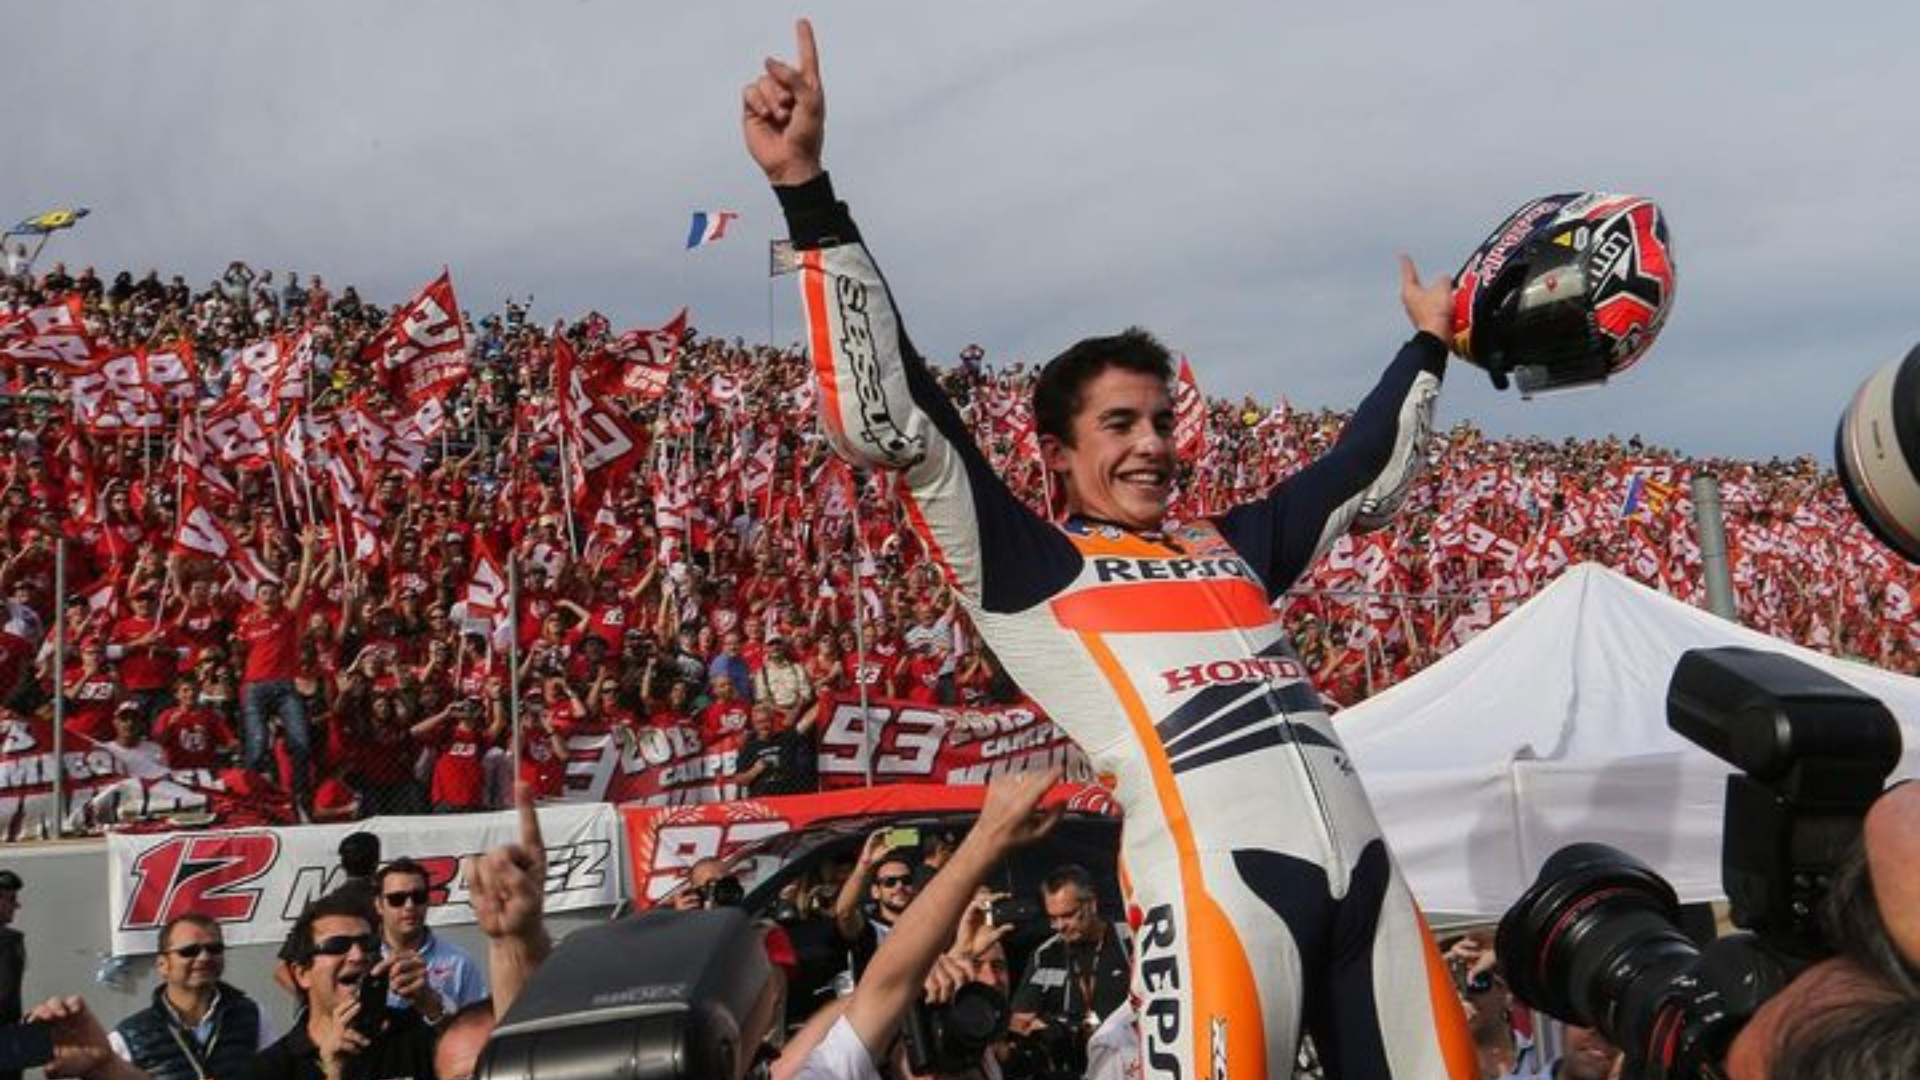 Marc Márquez, Circuito Ricardo Tormo, Circuito Cheste, GP Valencia, Gran Premio de Valencia, MotoGP